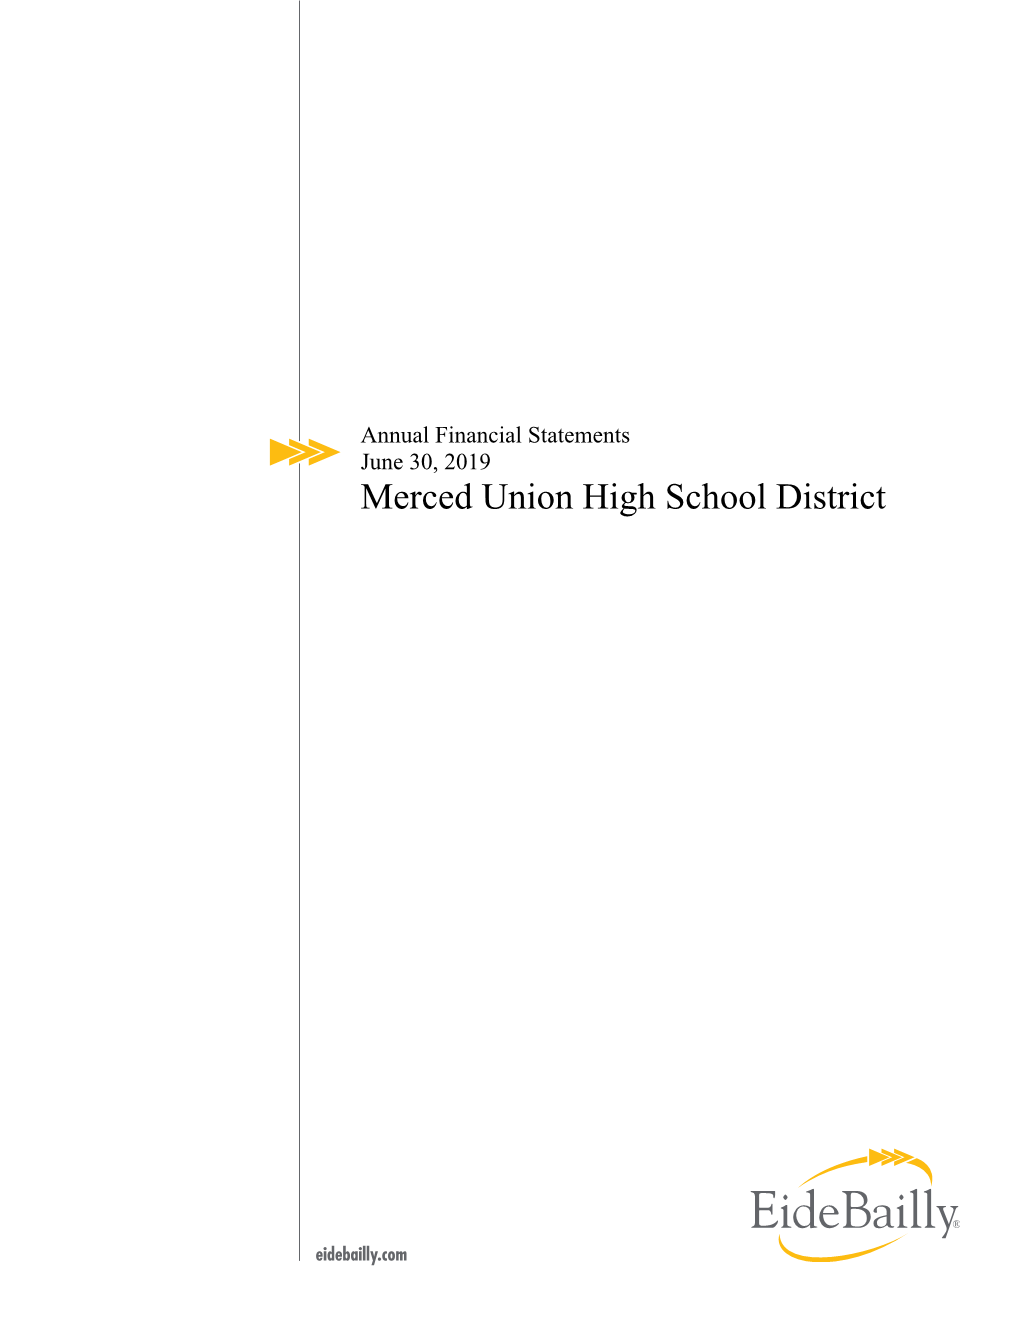 Merced Union High School District